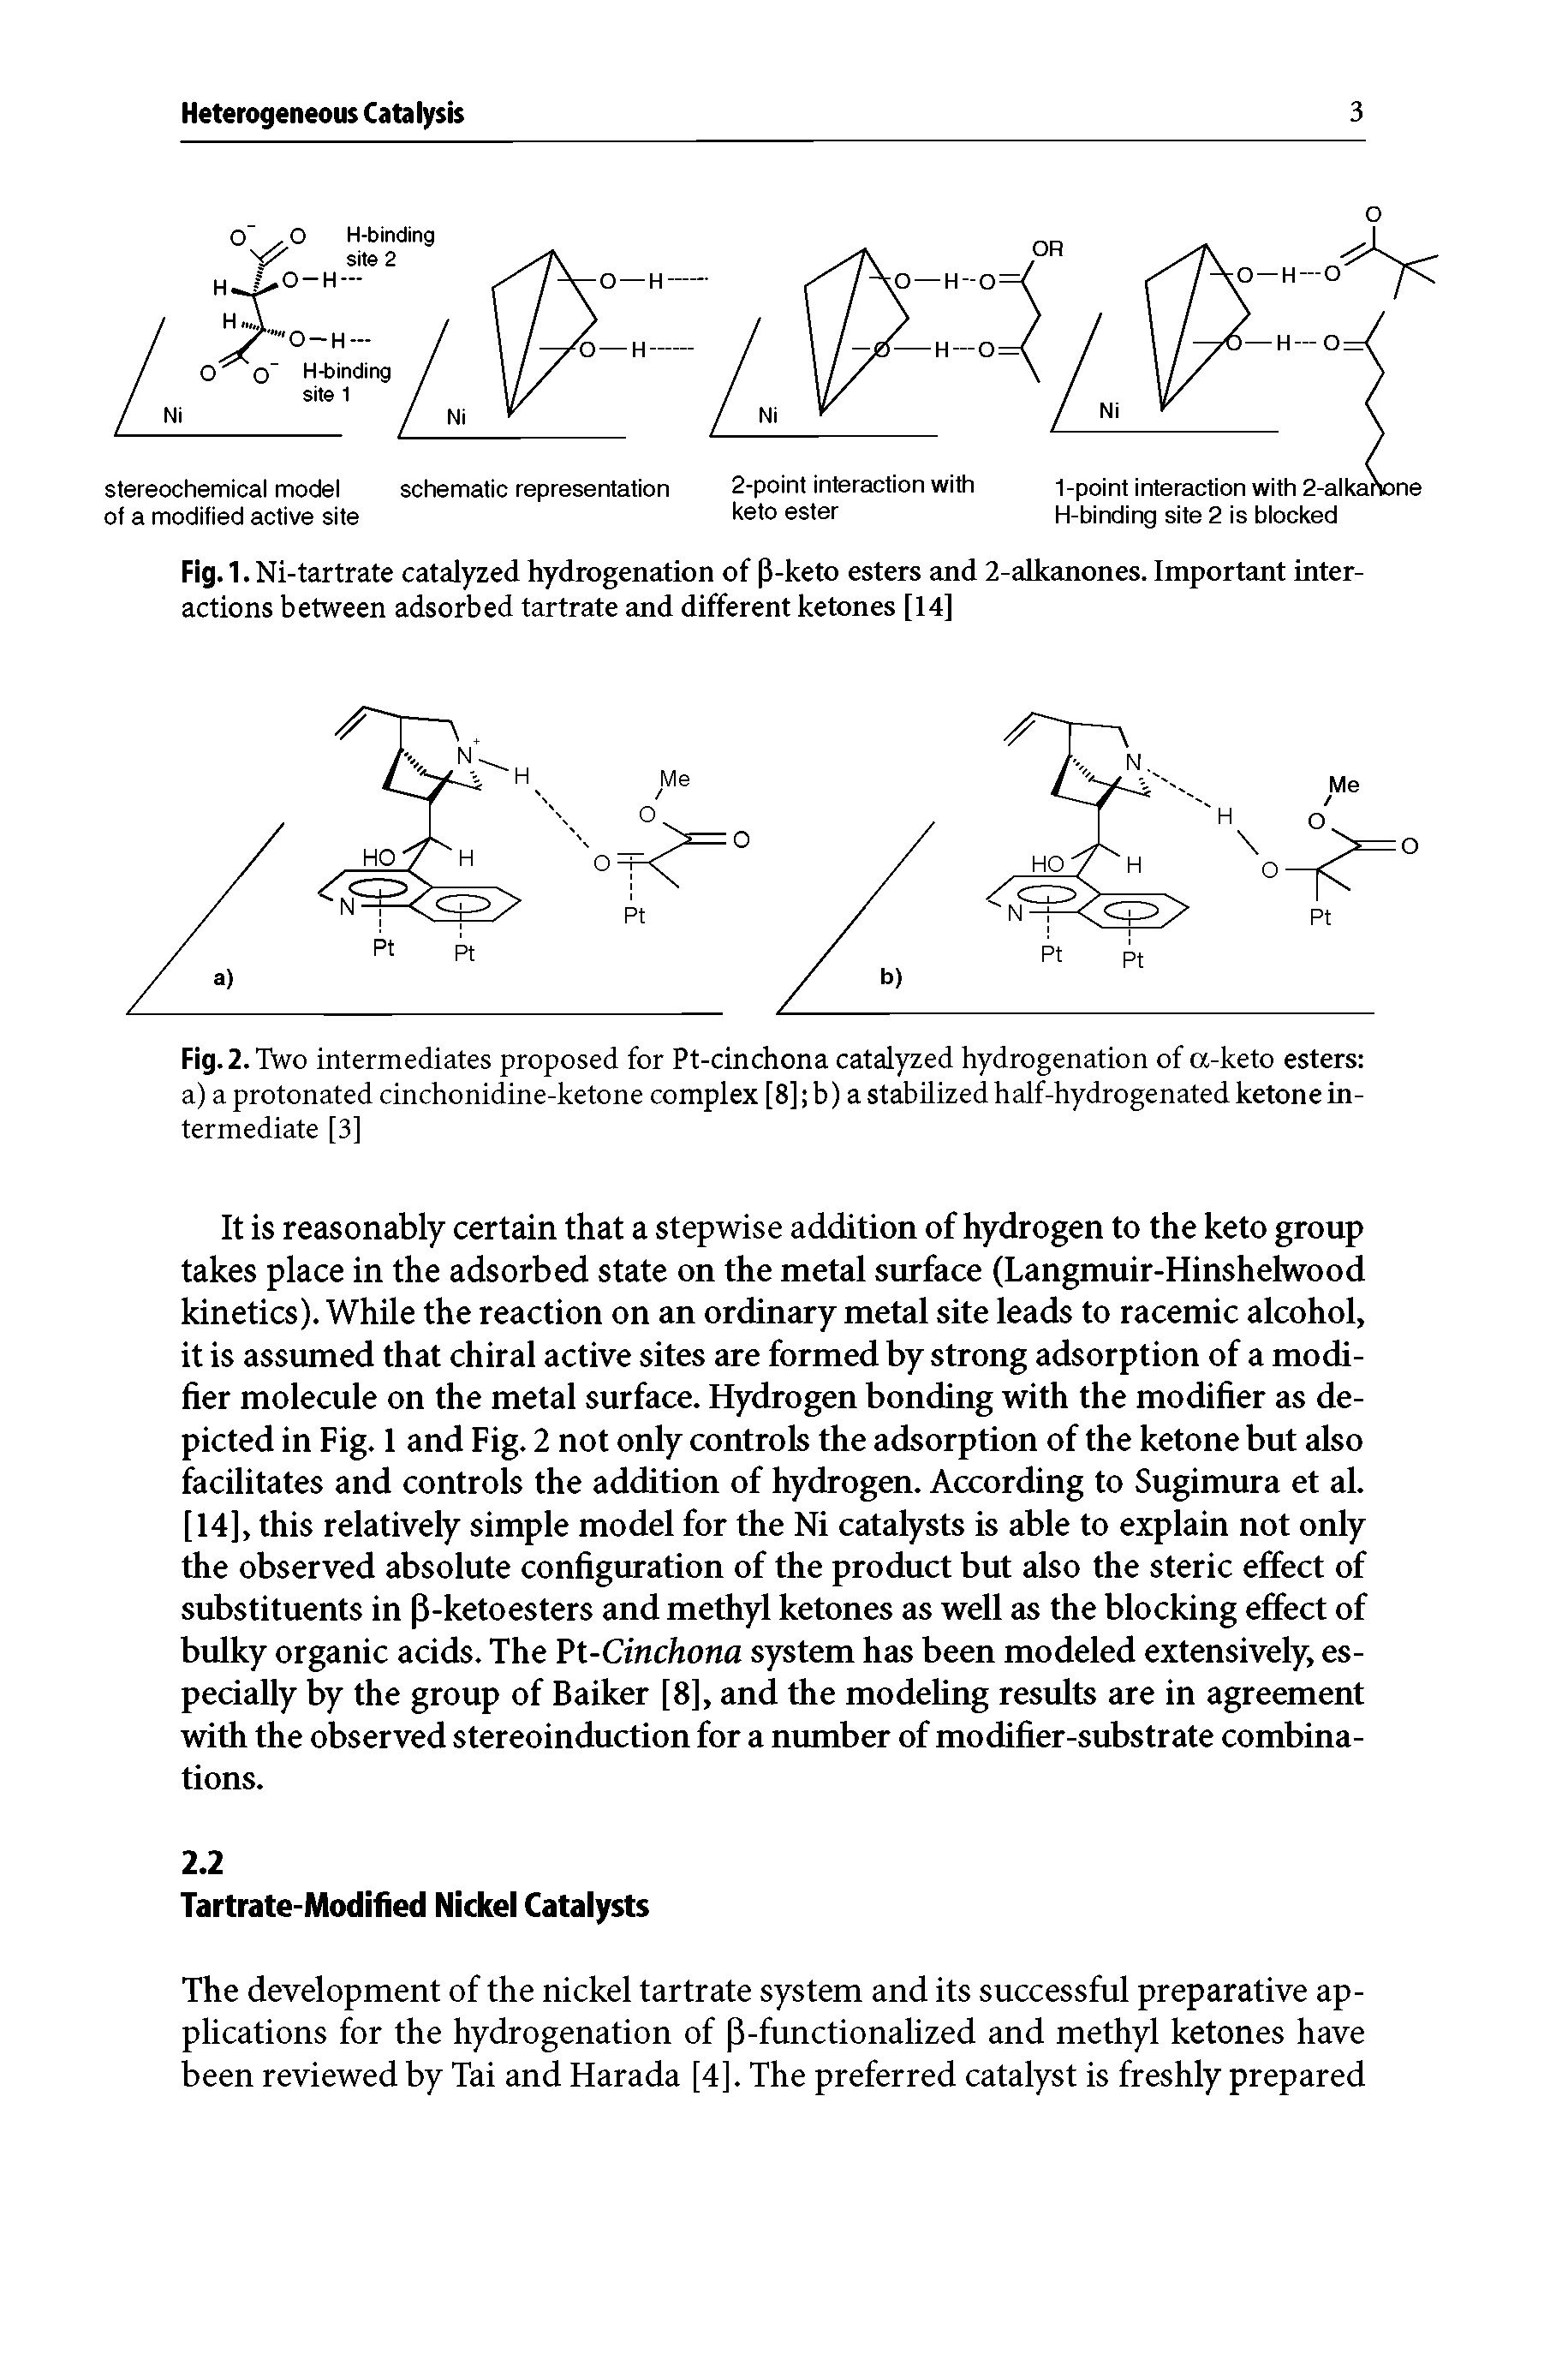 Fig. 2. Two intermediates proposed for Pt-cinchona catalyzed hydrogenation of a-keto esters a) a protonated cinchonidine-ketone complex [8] b) a stabilized half-hydrogenated ketone intermediate [3]...